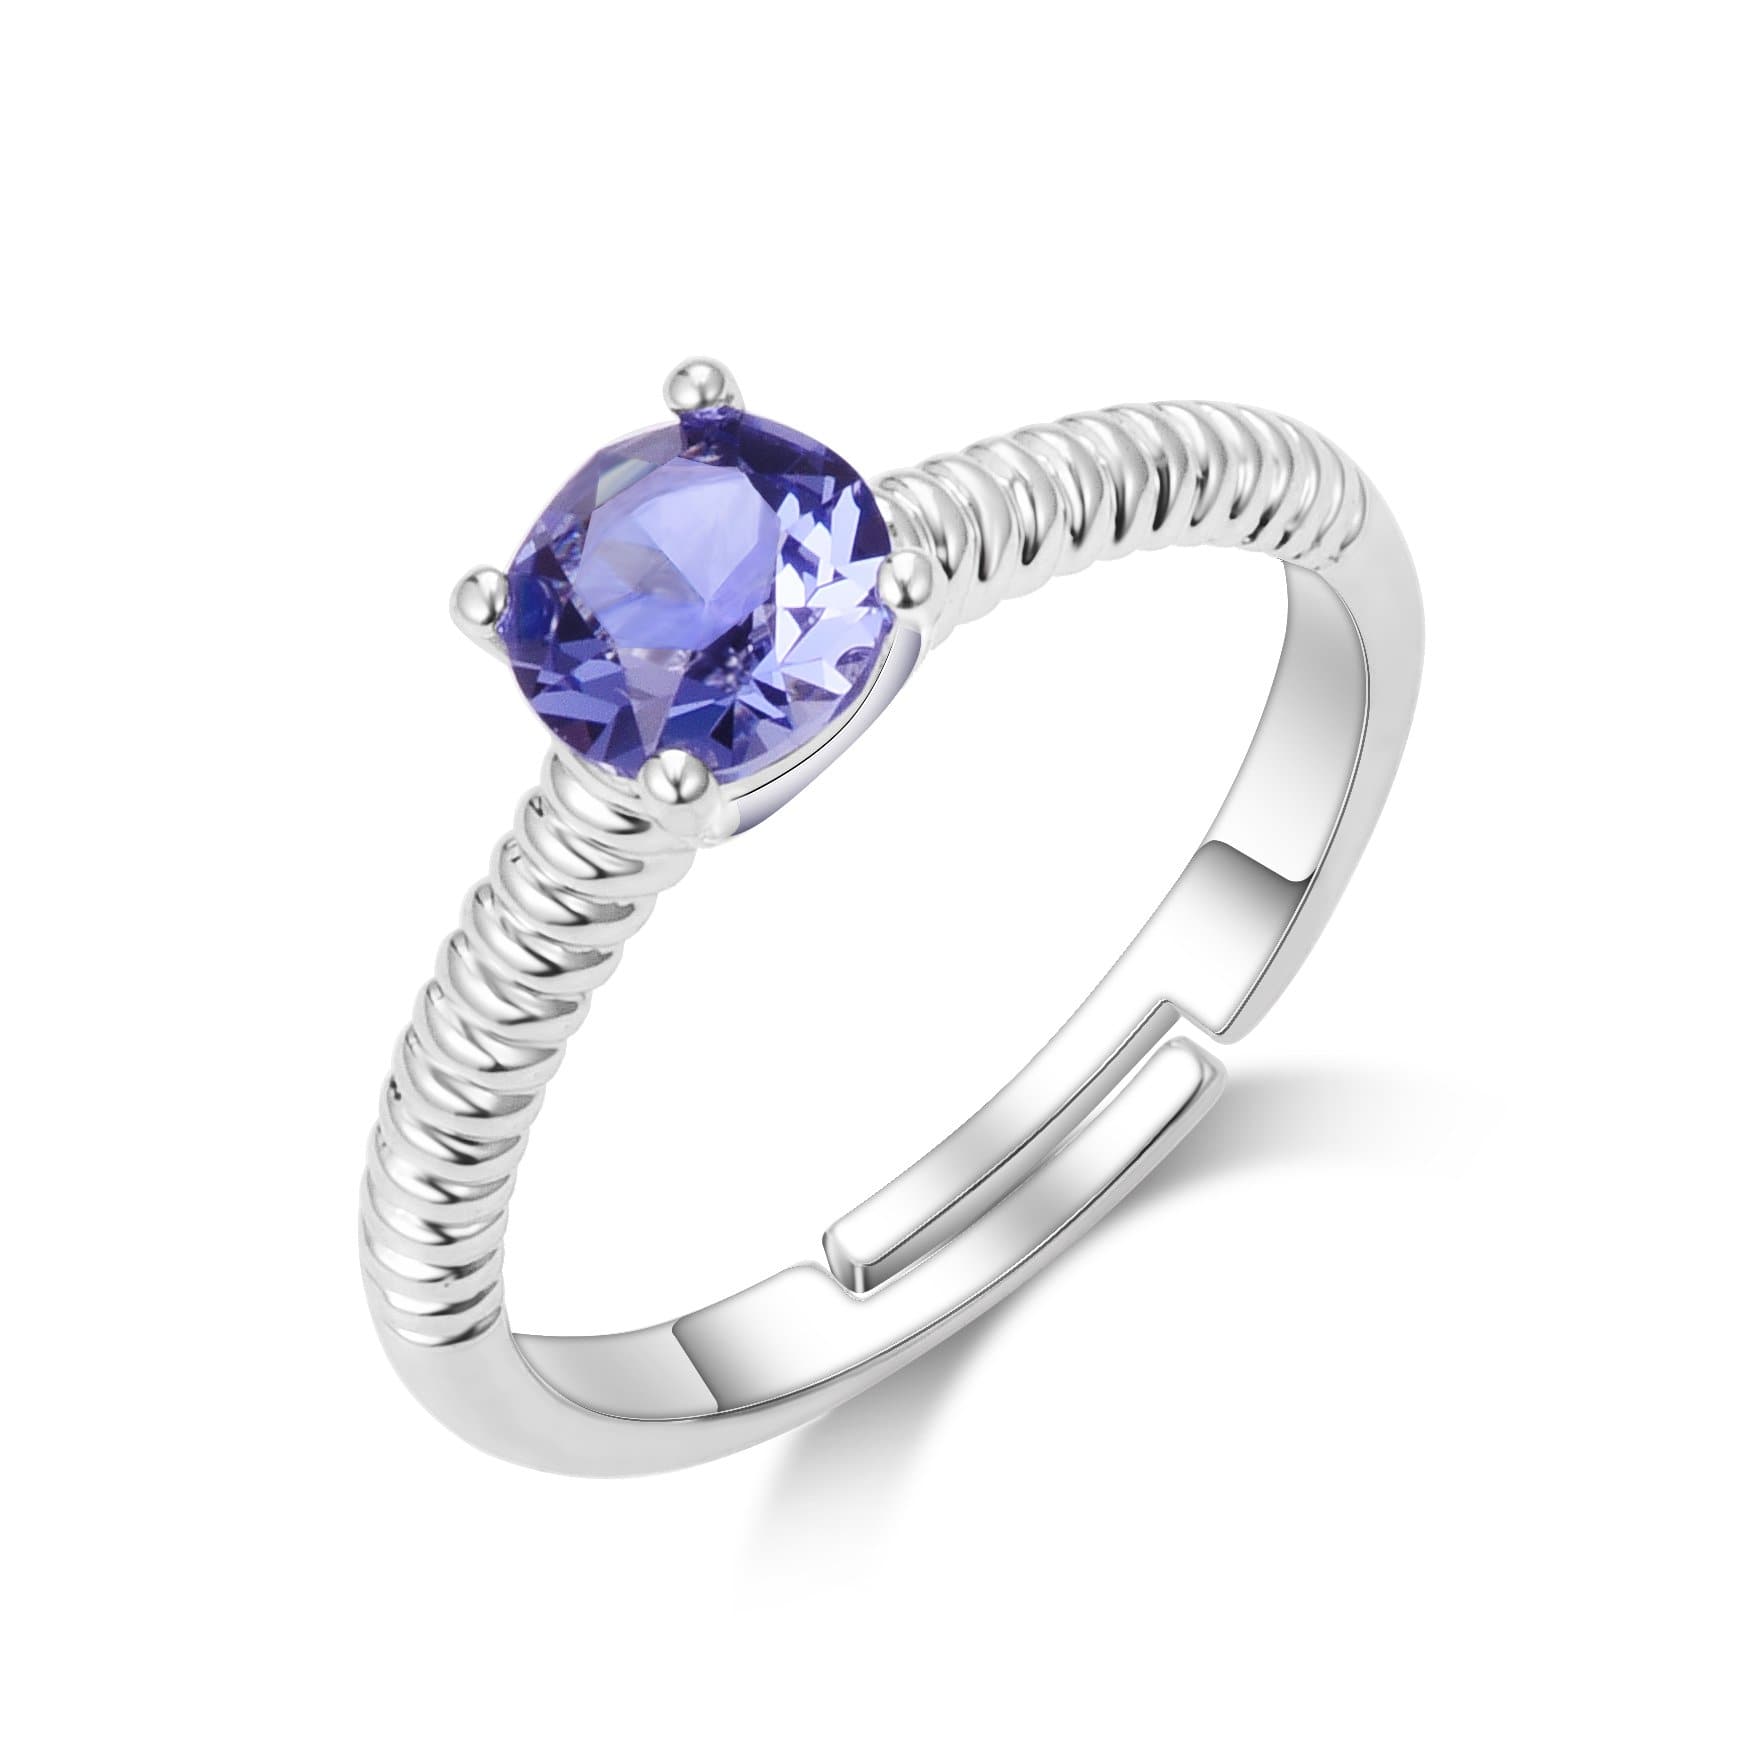 Light Purple Adjustable Crystal Ring Created with Zircondia® Crystals by Philip Jones Jewellery